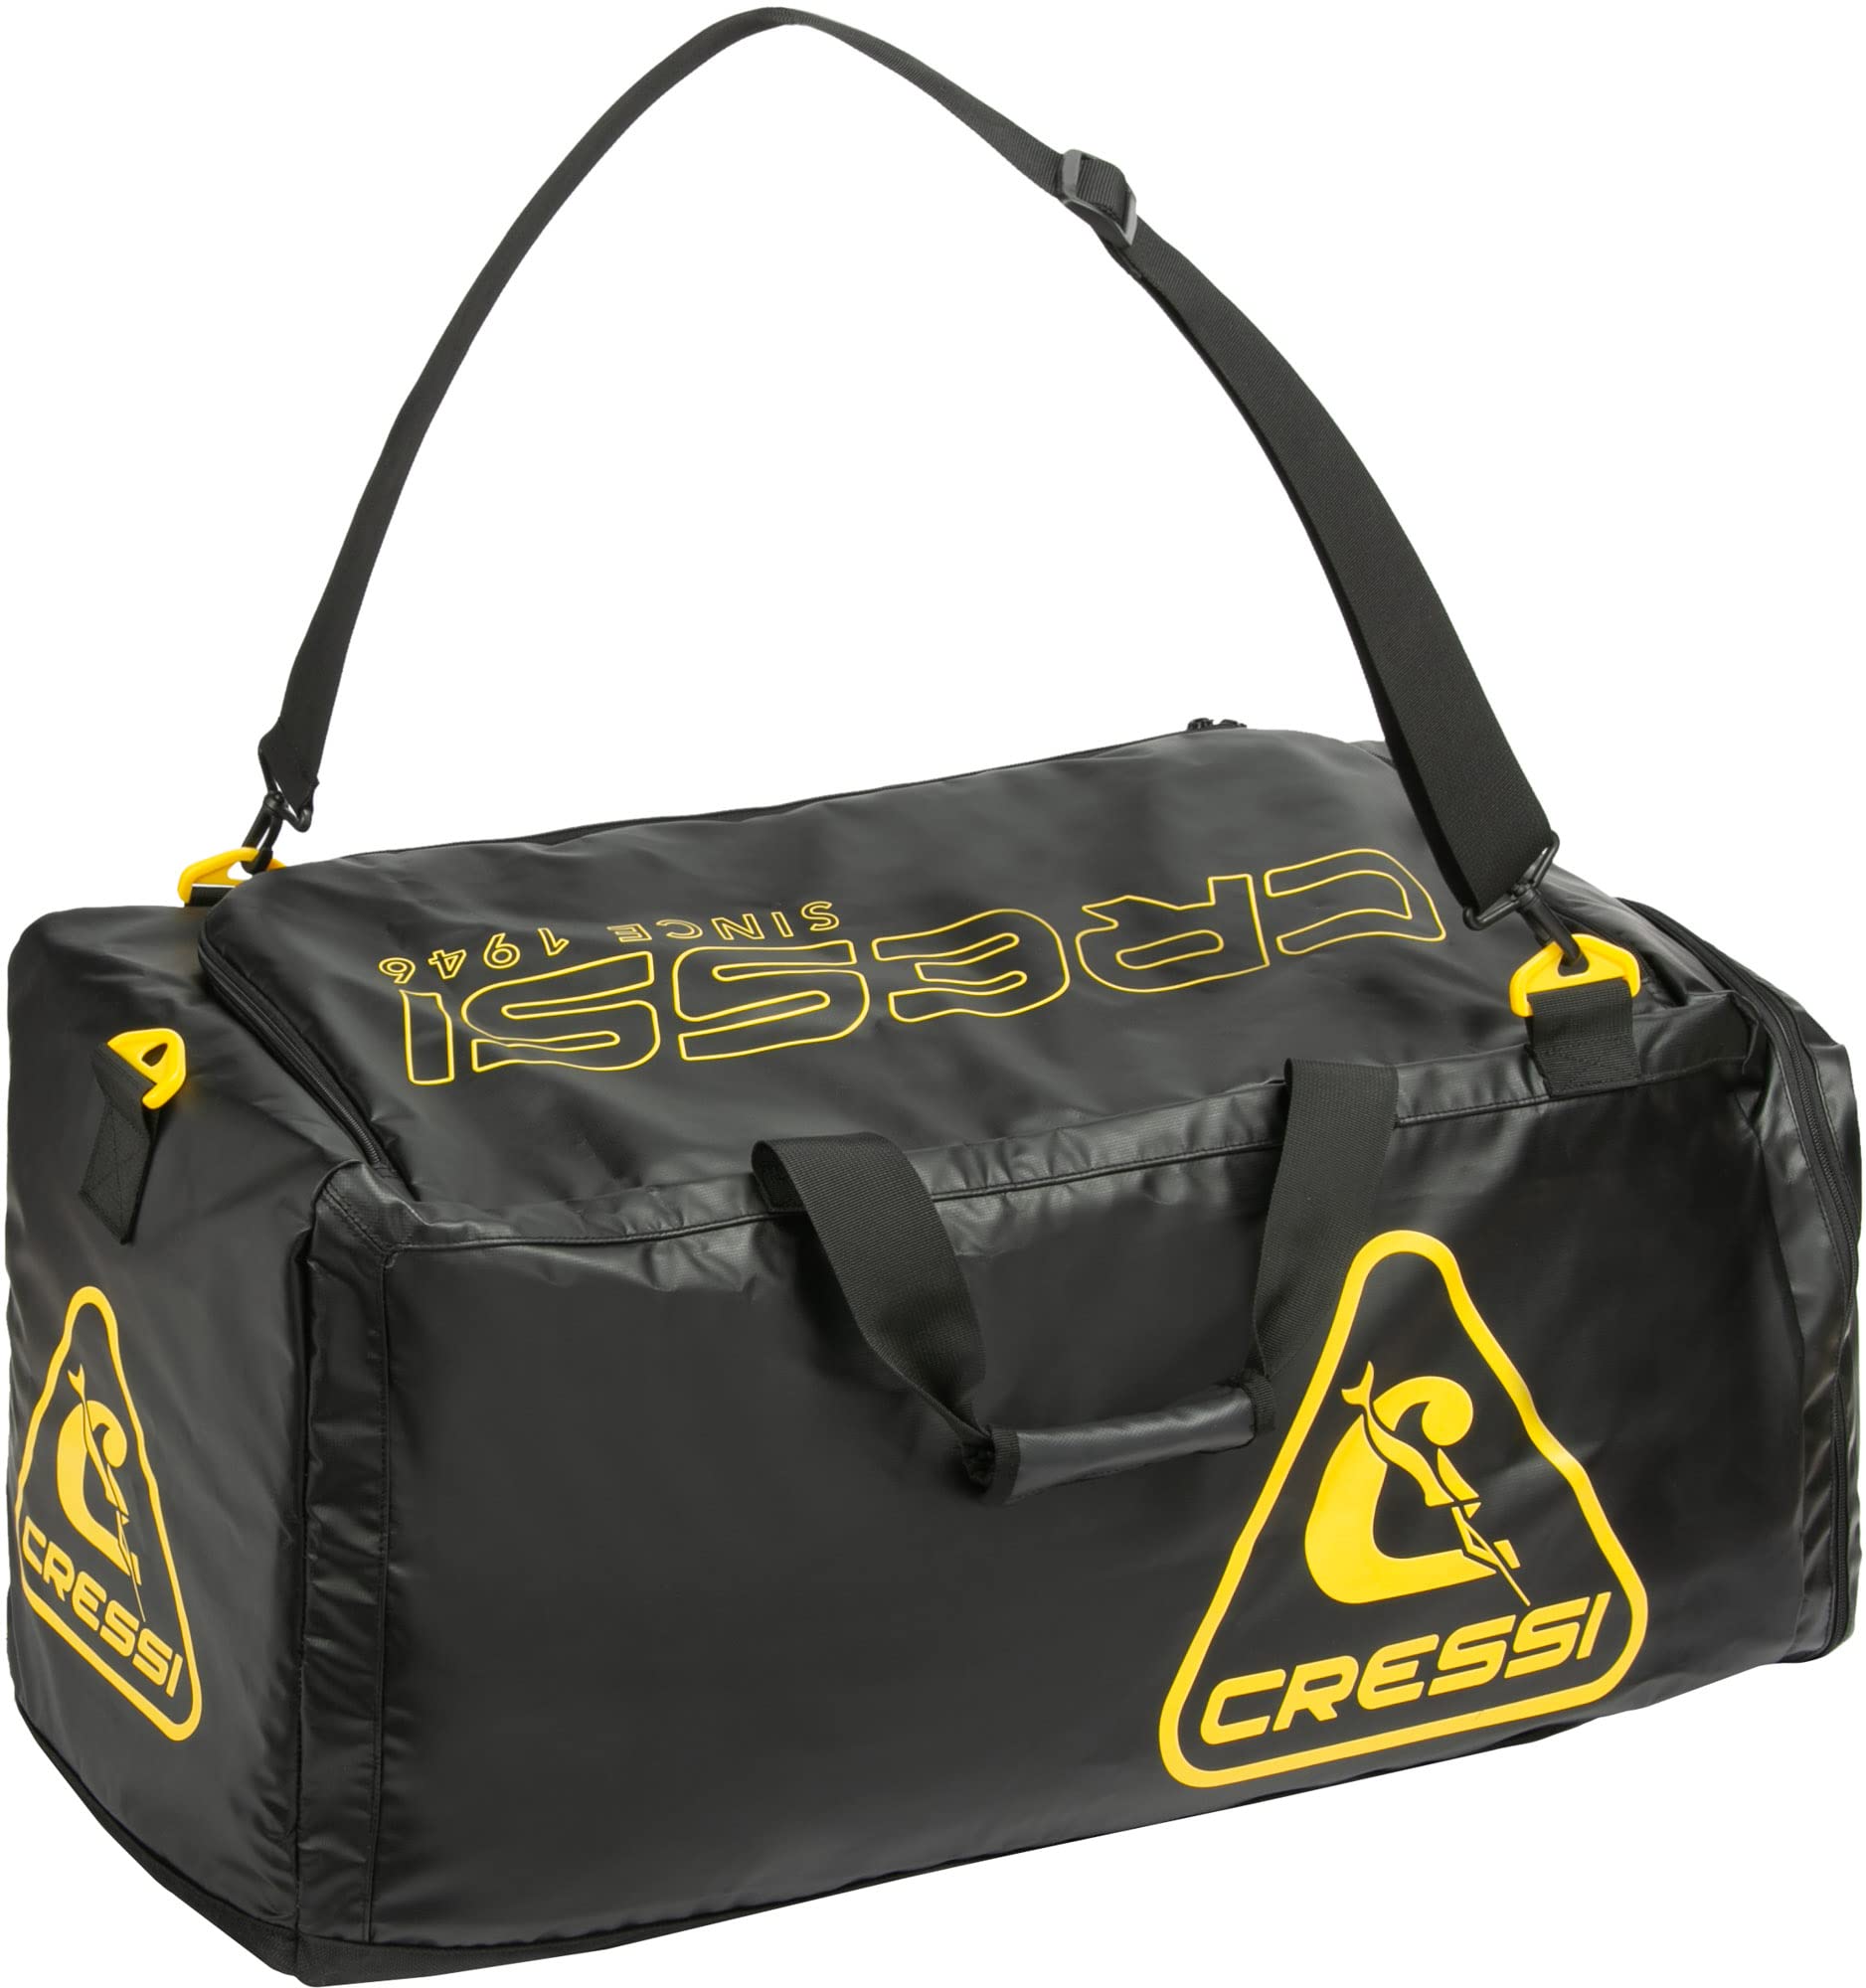 Cressi Waterproof 110 liter Duffel Bag - Adjustable Shoulder Strap - Equipment Protection for Outdoor Activities, Water Sport, Boating, Scuba Diving - Megattera: Designed in Italy